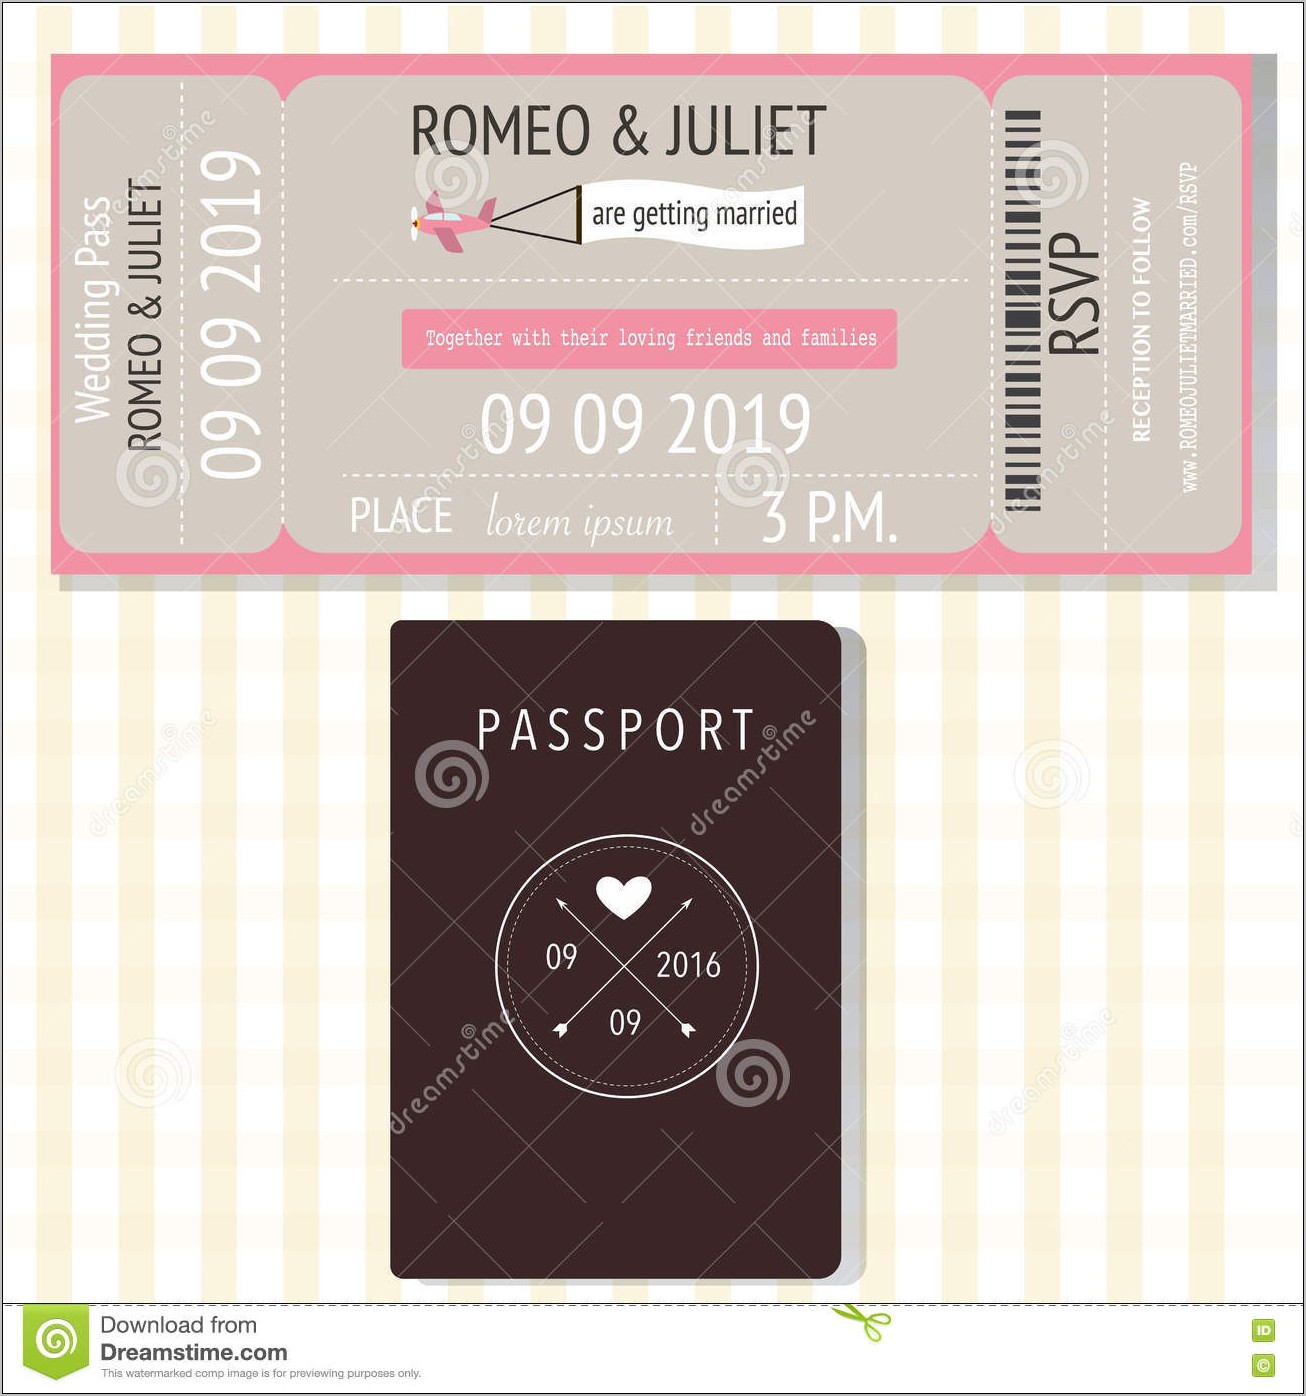 Passport Wedding Invitation Cards